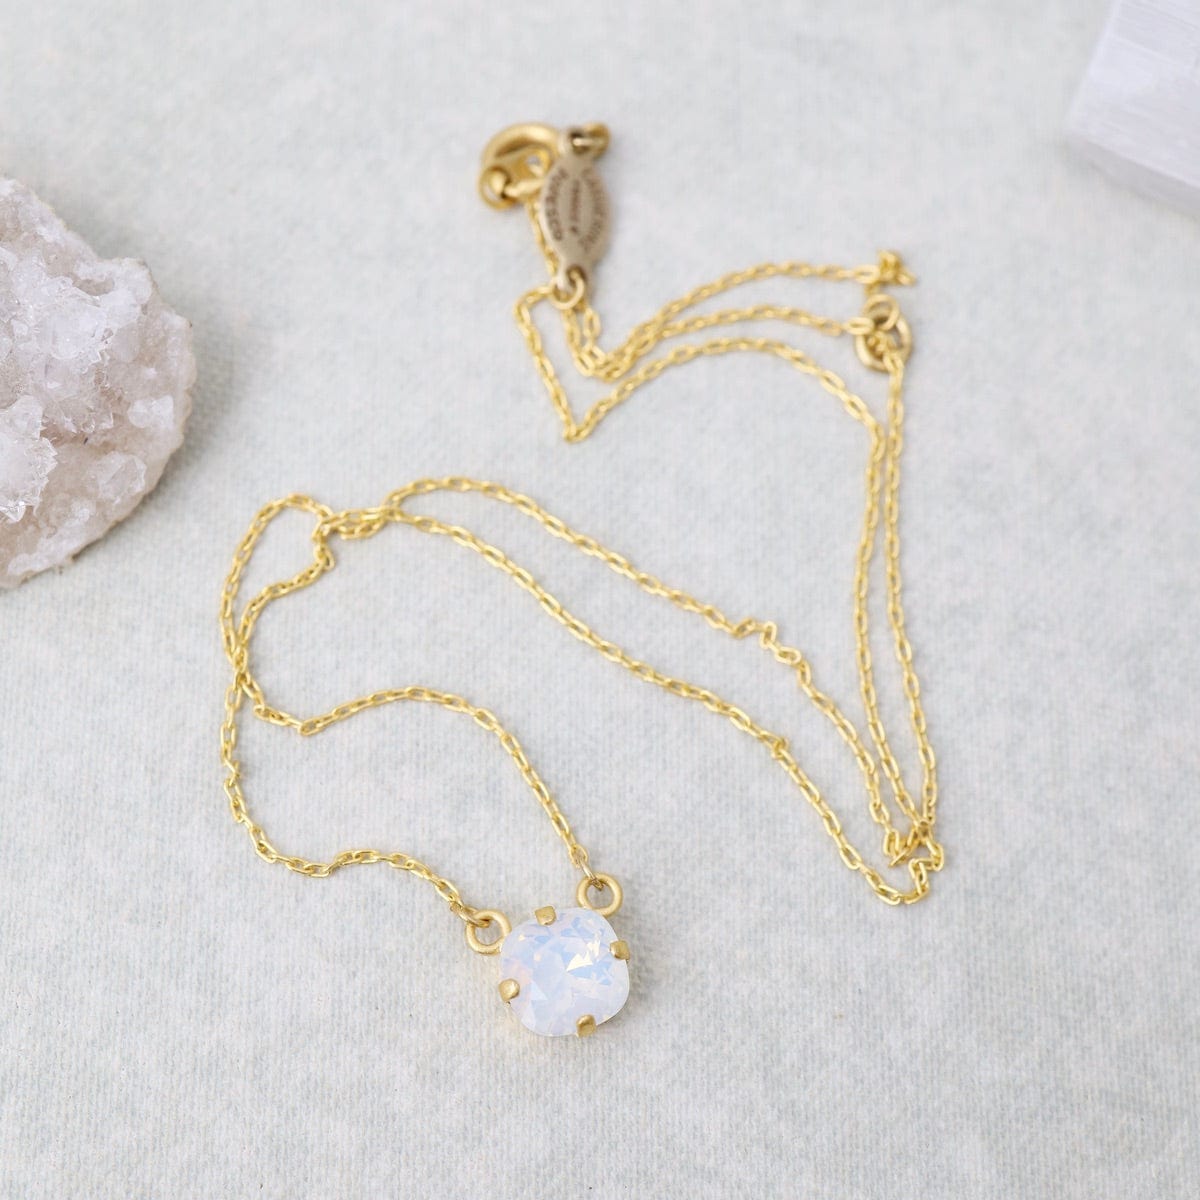 NKL-JM Single Swaovski Crystal Necklace White Opal - Gold